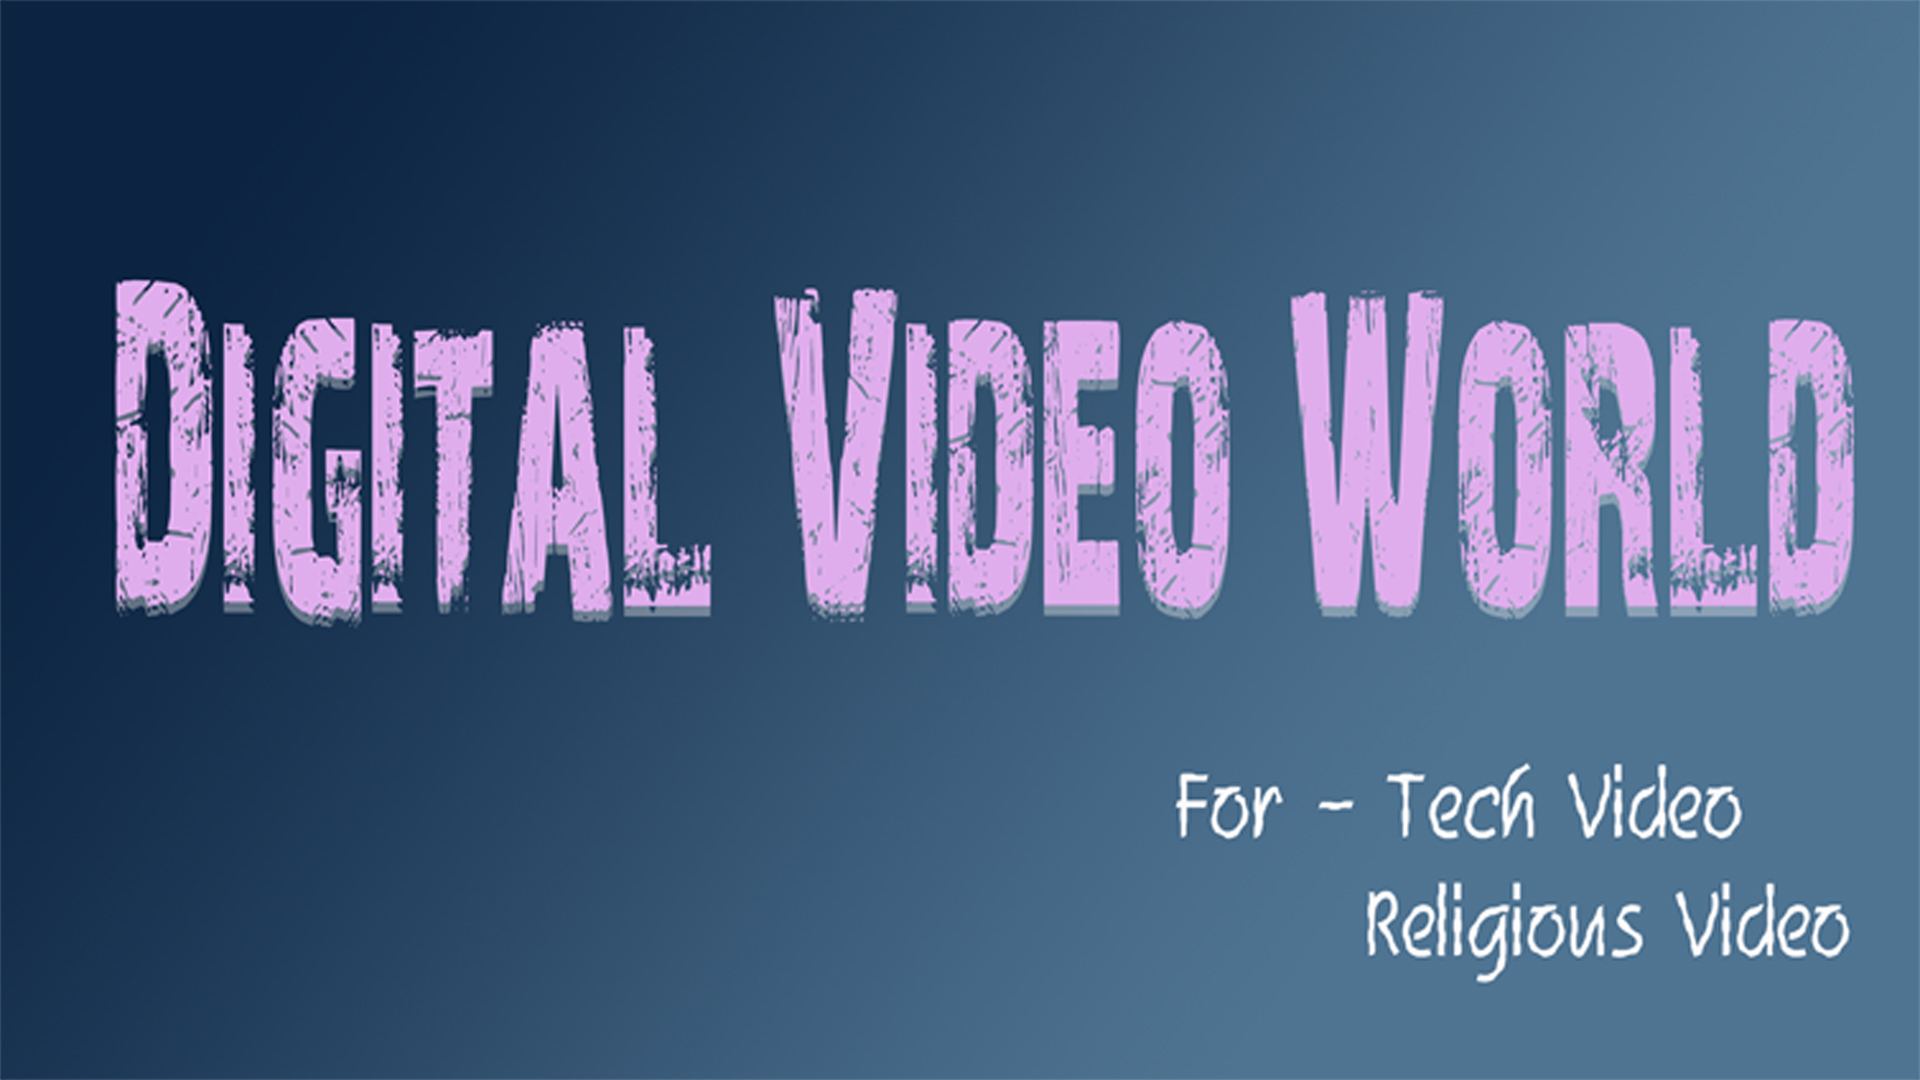 digital video world